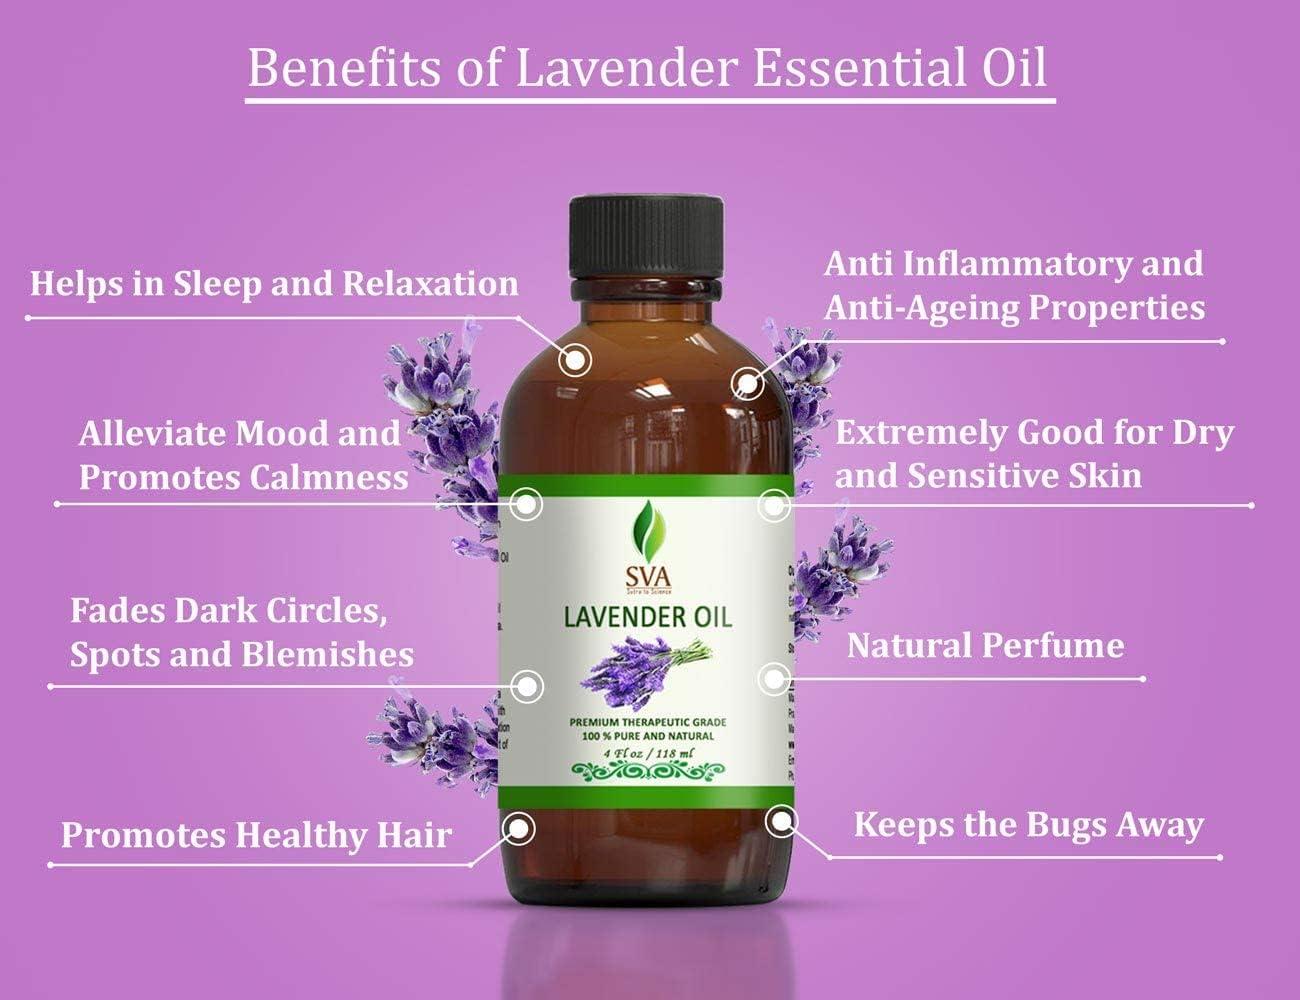 Lavender Essential Oil Dropper - 100% Pure & Organic